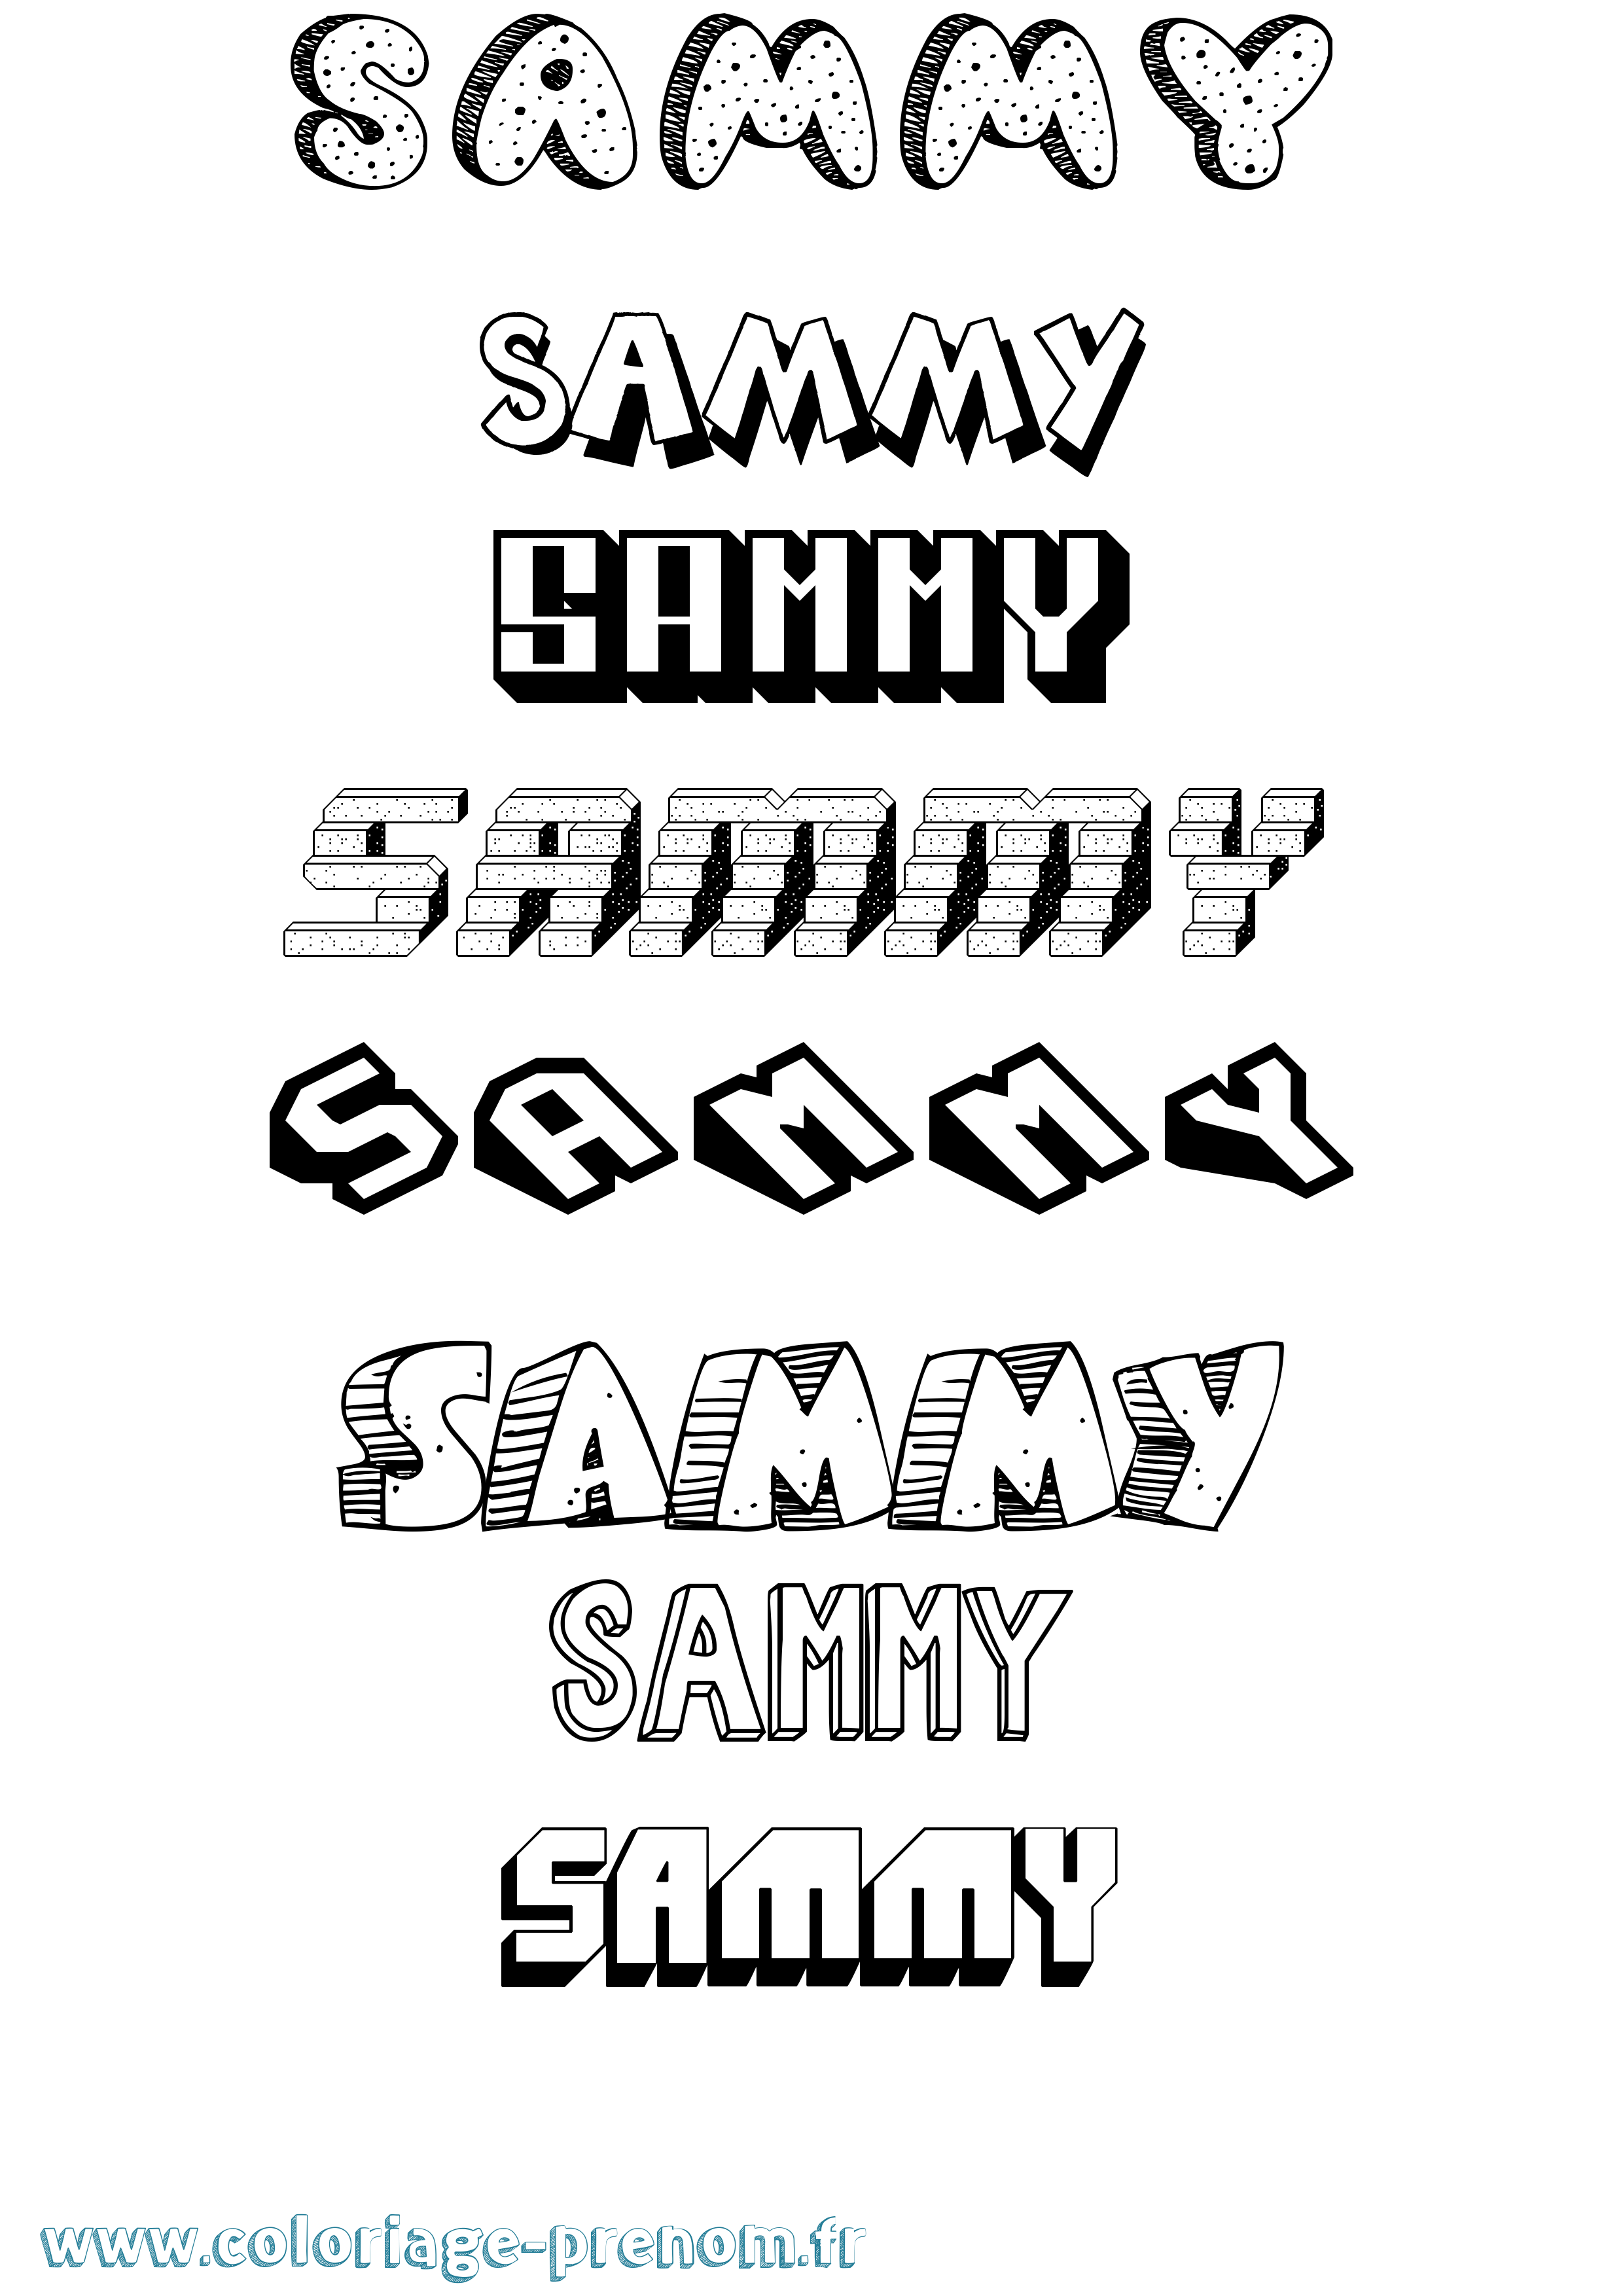 Coloriage prénom Sammy Effet 3D